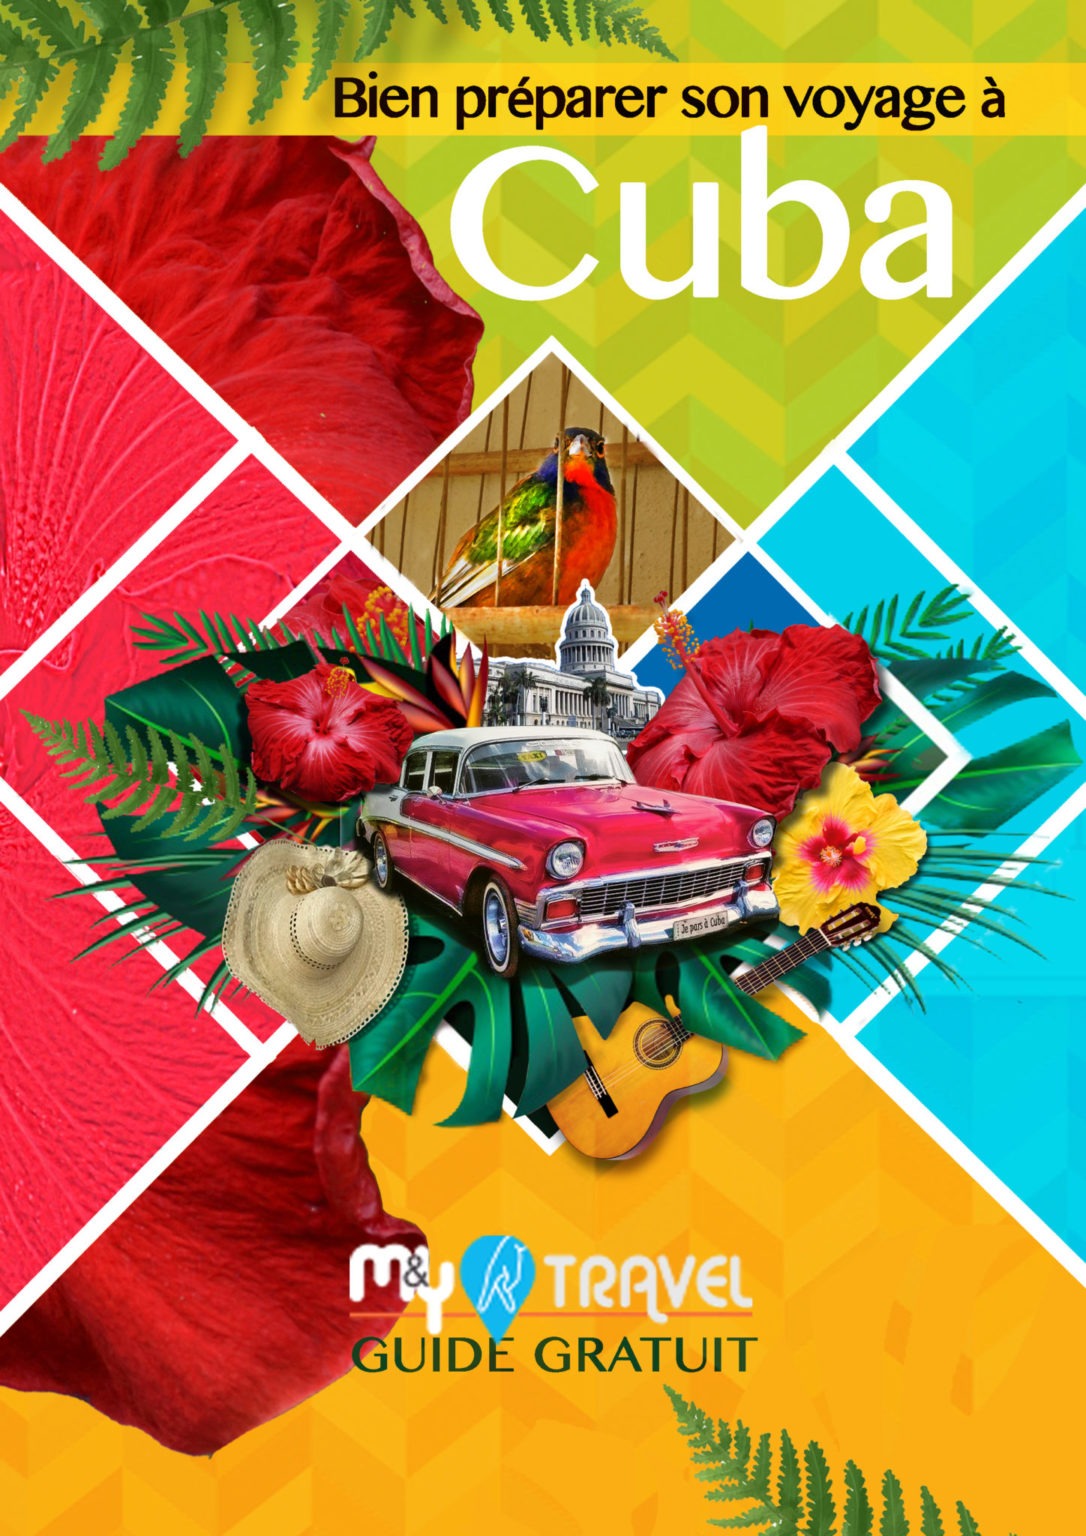 travel brochure about cuba